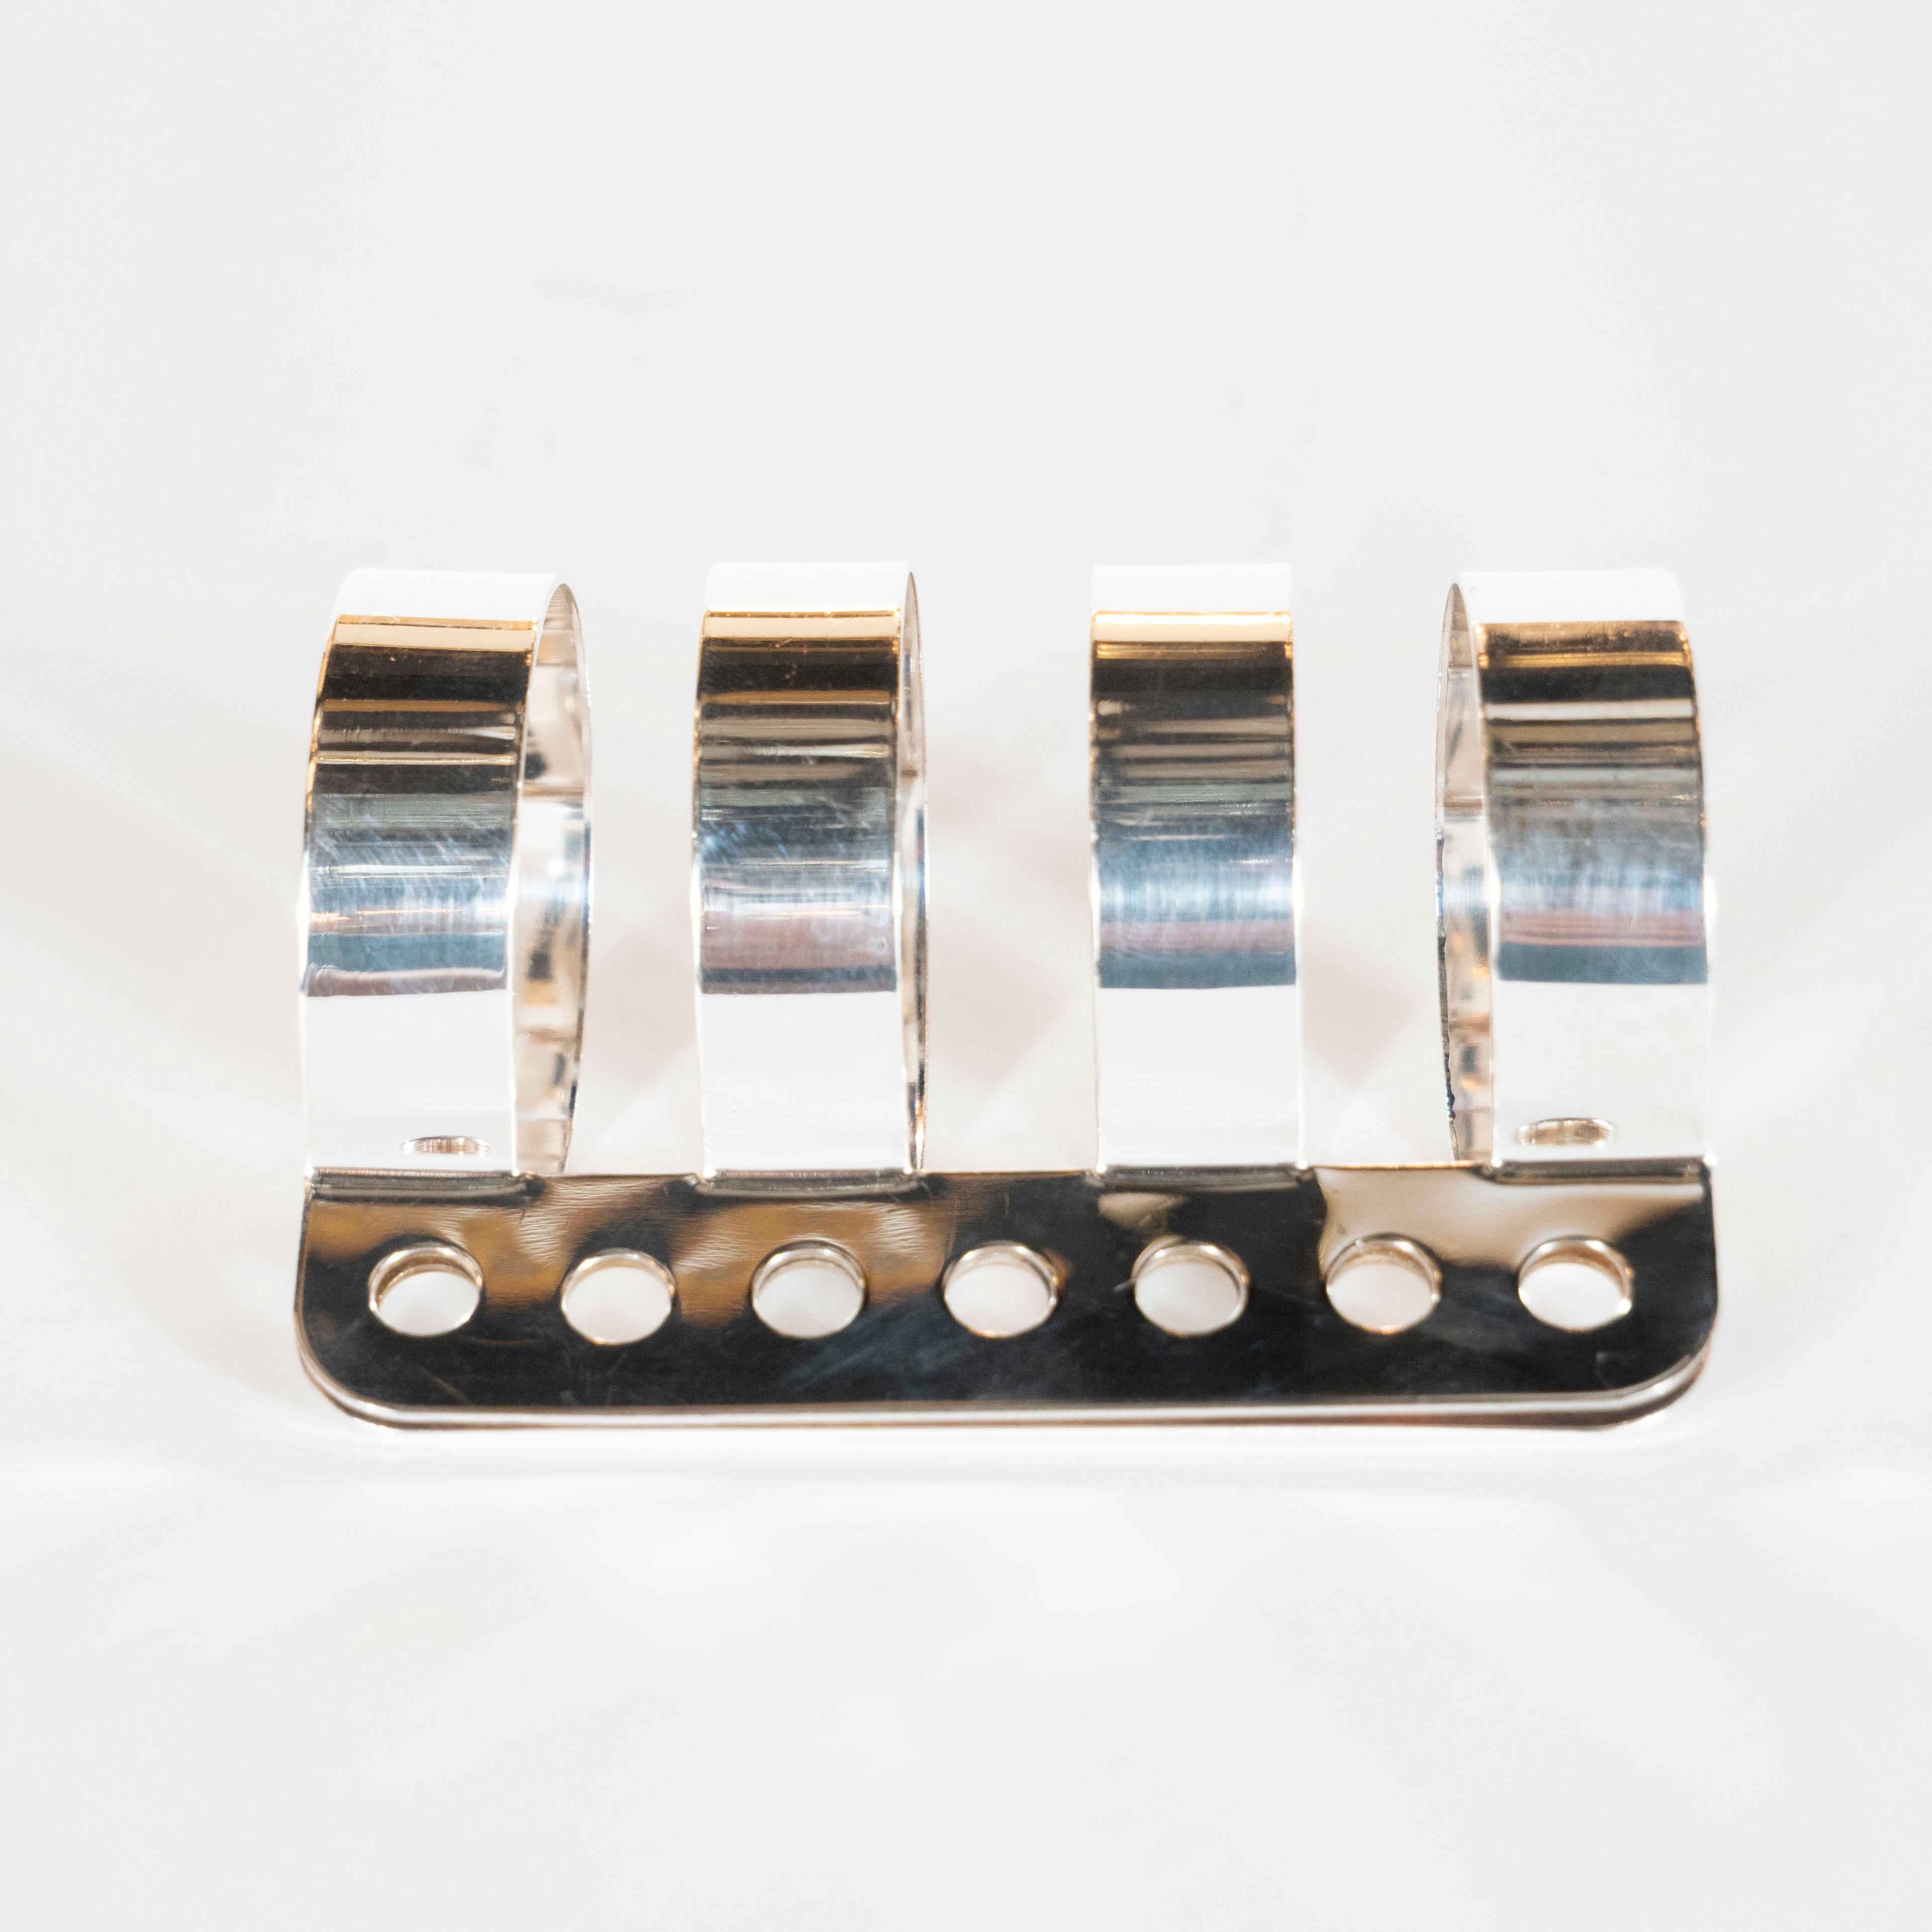 Swiss Modernist Memphis Silverplate Napkin Rings by Nathalie du Pasquier for Bodum